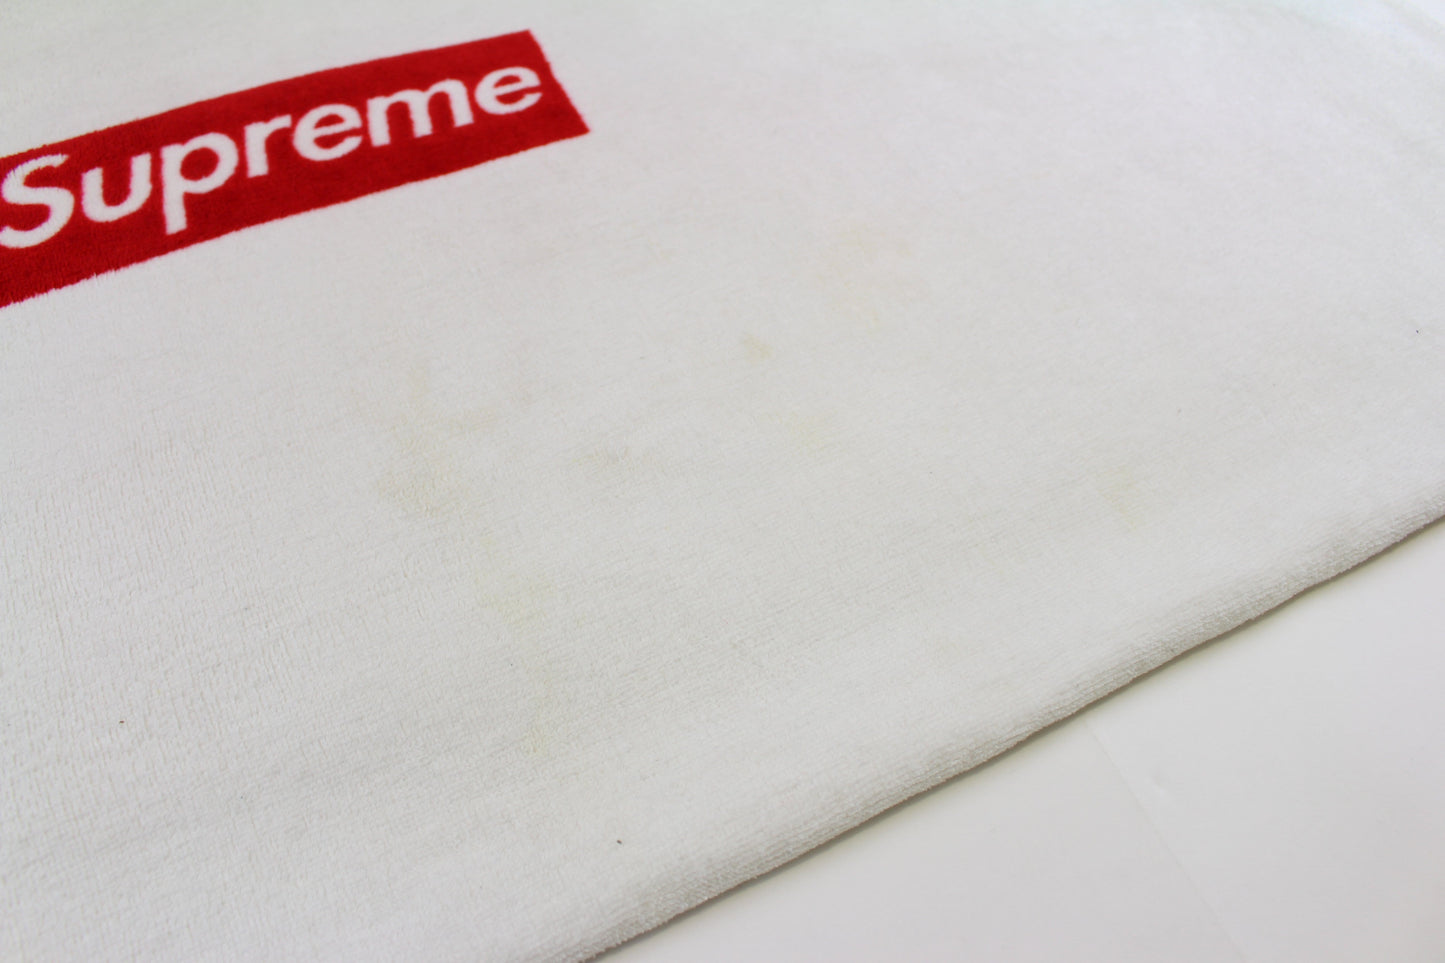 Supreme Box Logo giant Towel - SaruGeneral